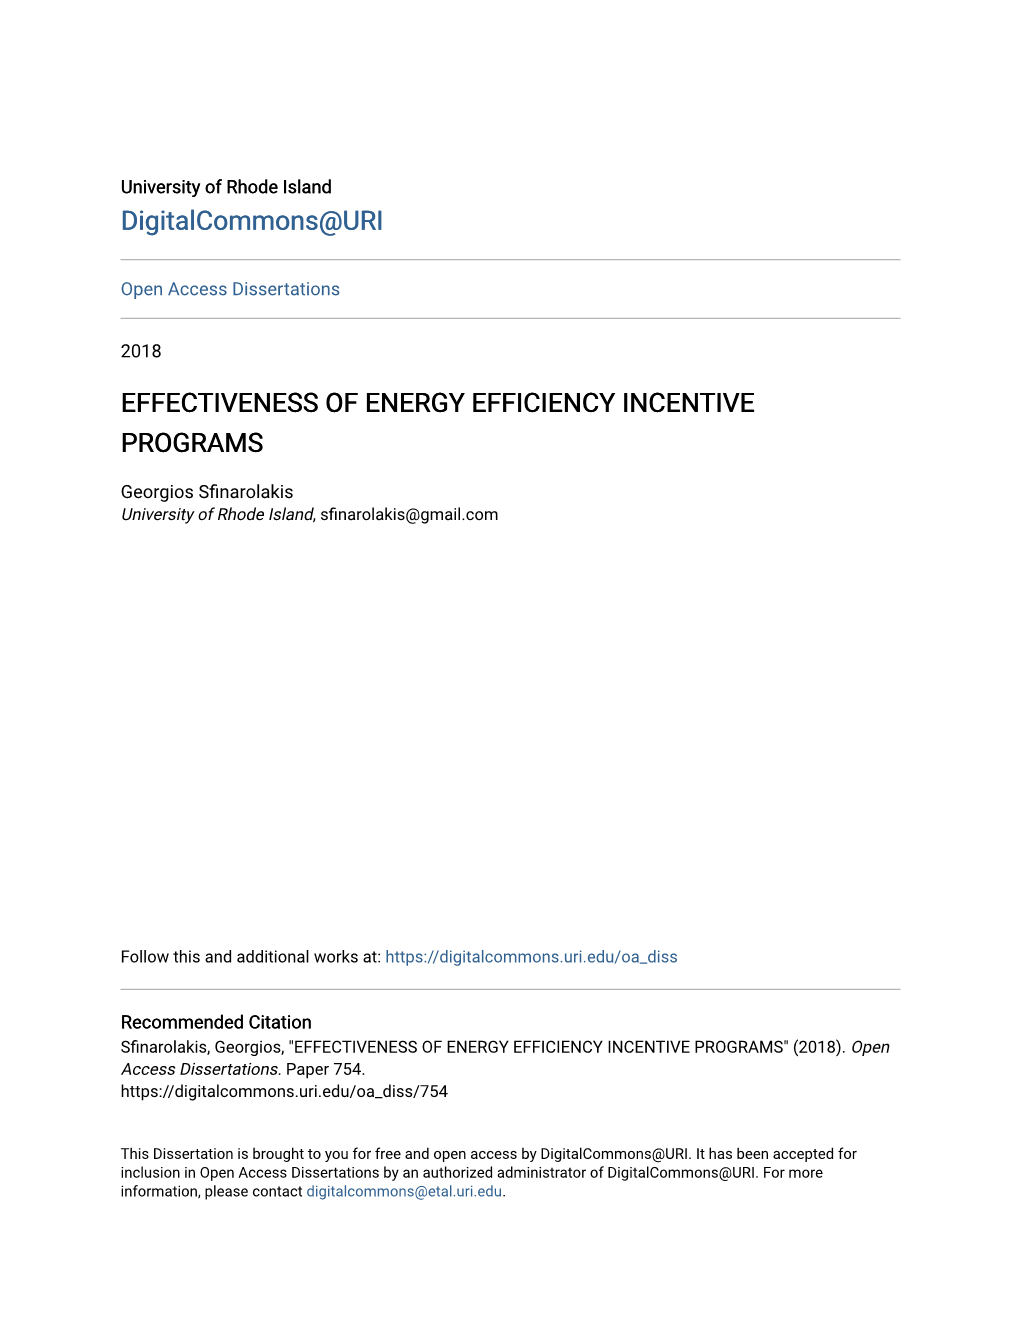 Effectiveness of Energy Efficiency Incentive Programs